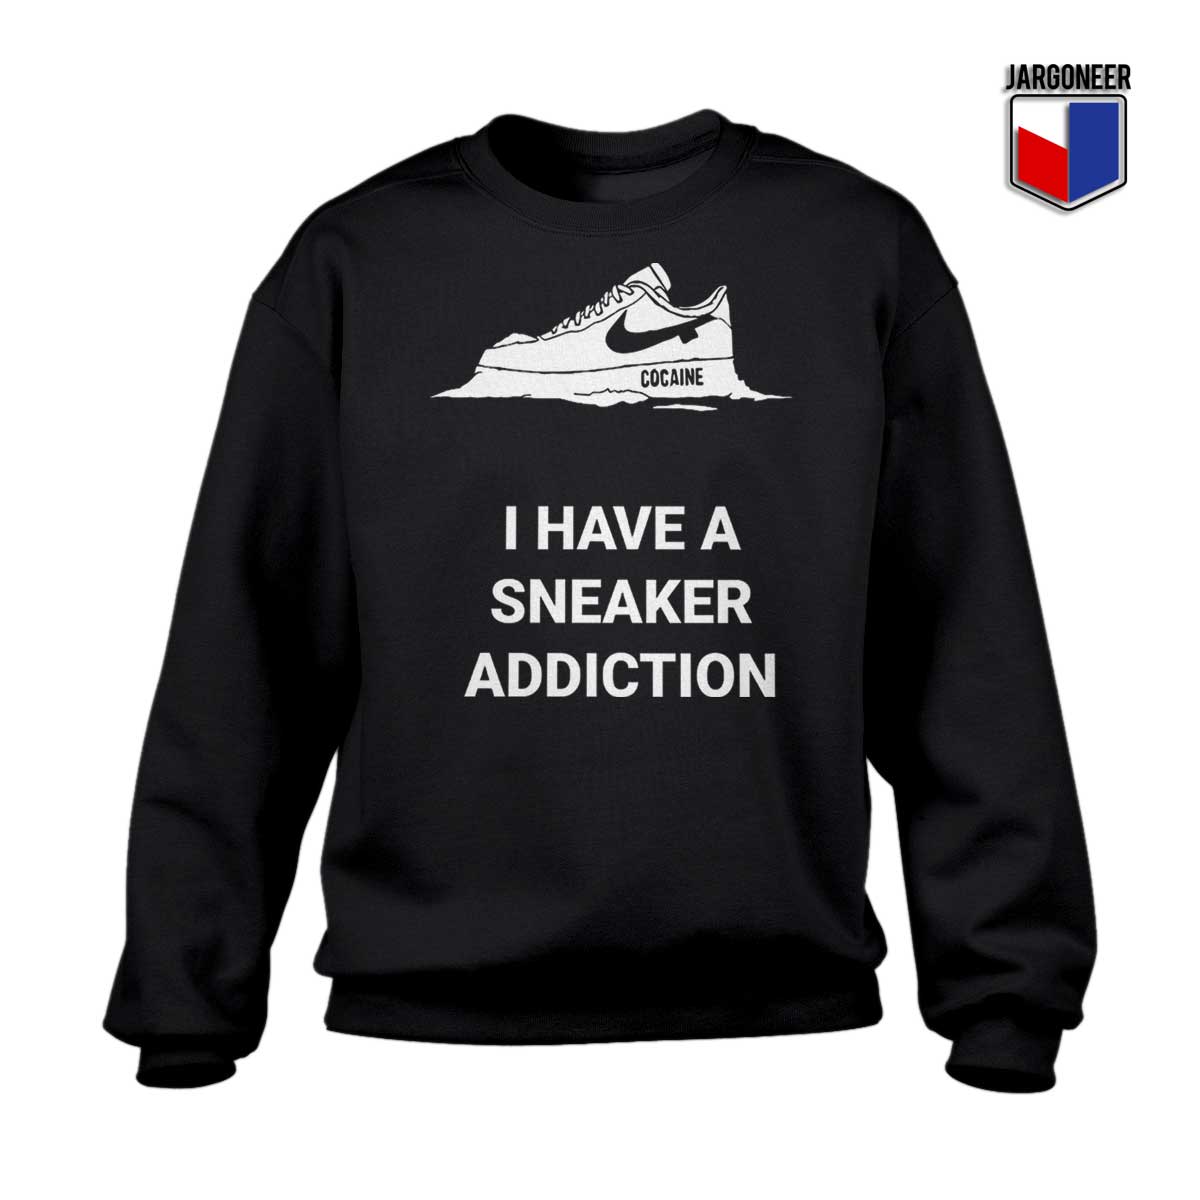 I Have A Sneaker Addiction Sweatshirt - Shop Unique Graphic Cool Shirt Designs